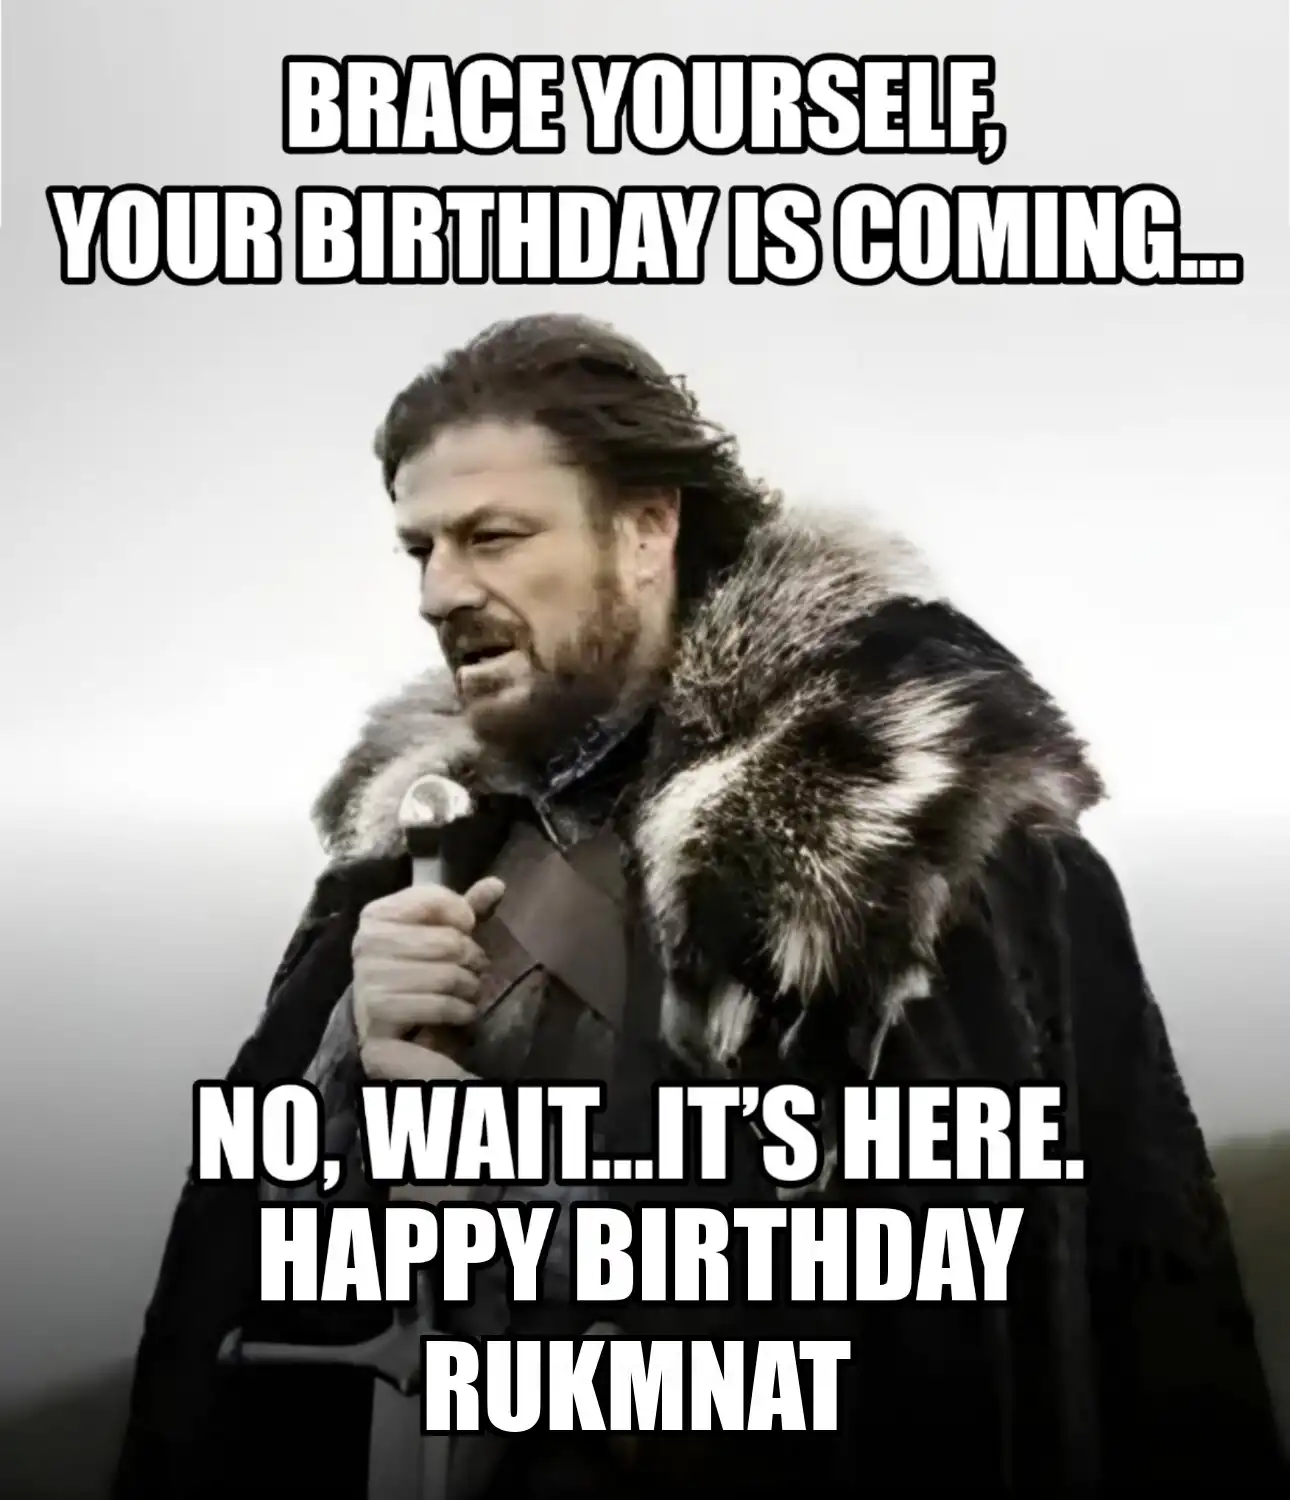 Happy Birthday Rukmnat Brace Yourself Your Birthday Is Coming Meme